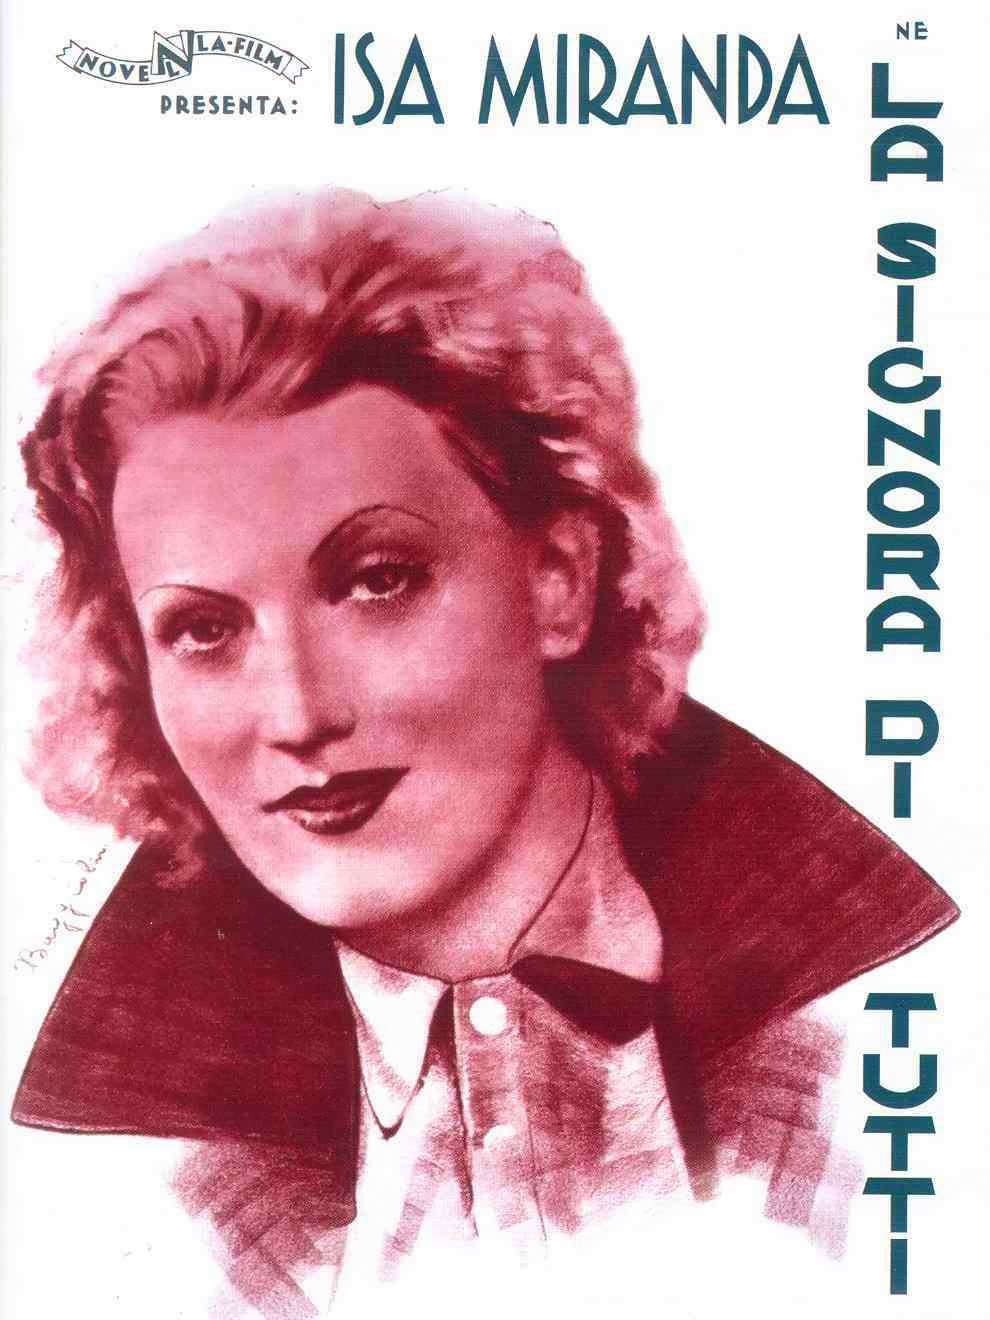 Ver película : La mujer de todos, La signora di tutti de 1934 -Max Ophïls-